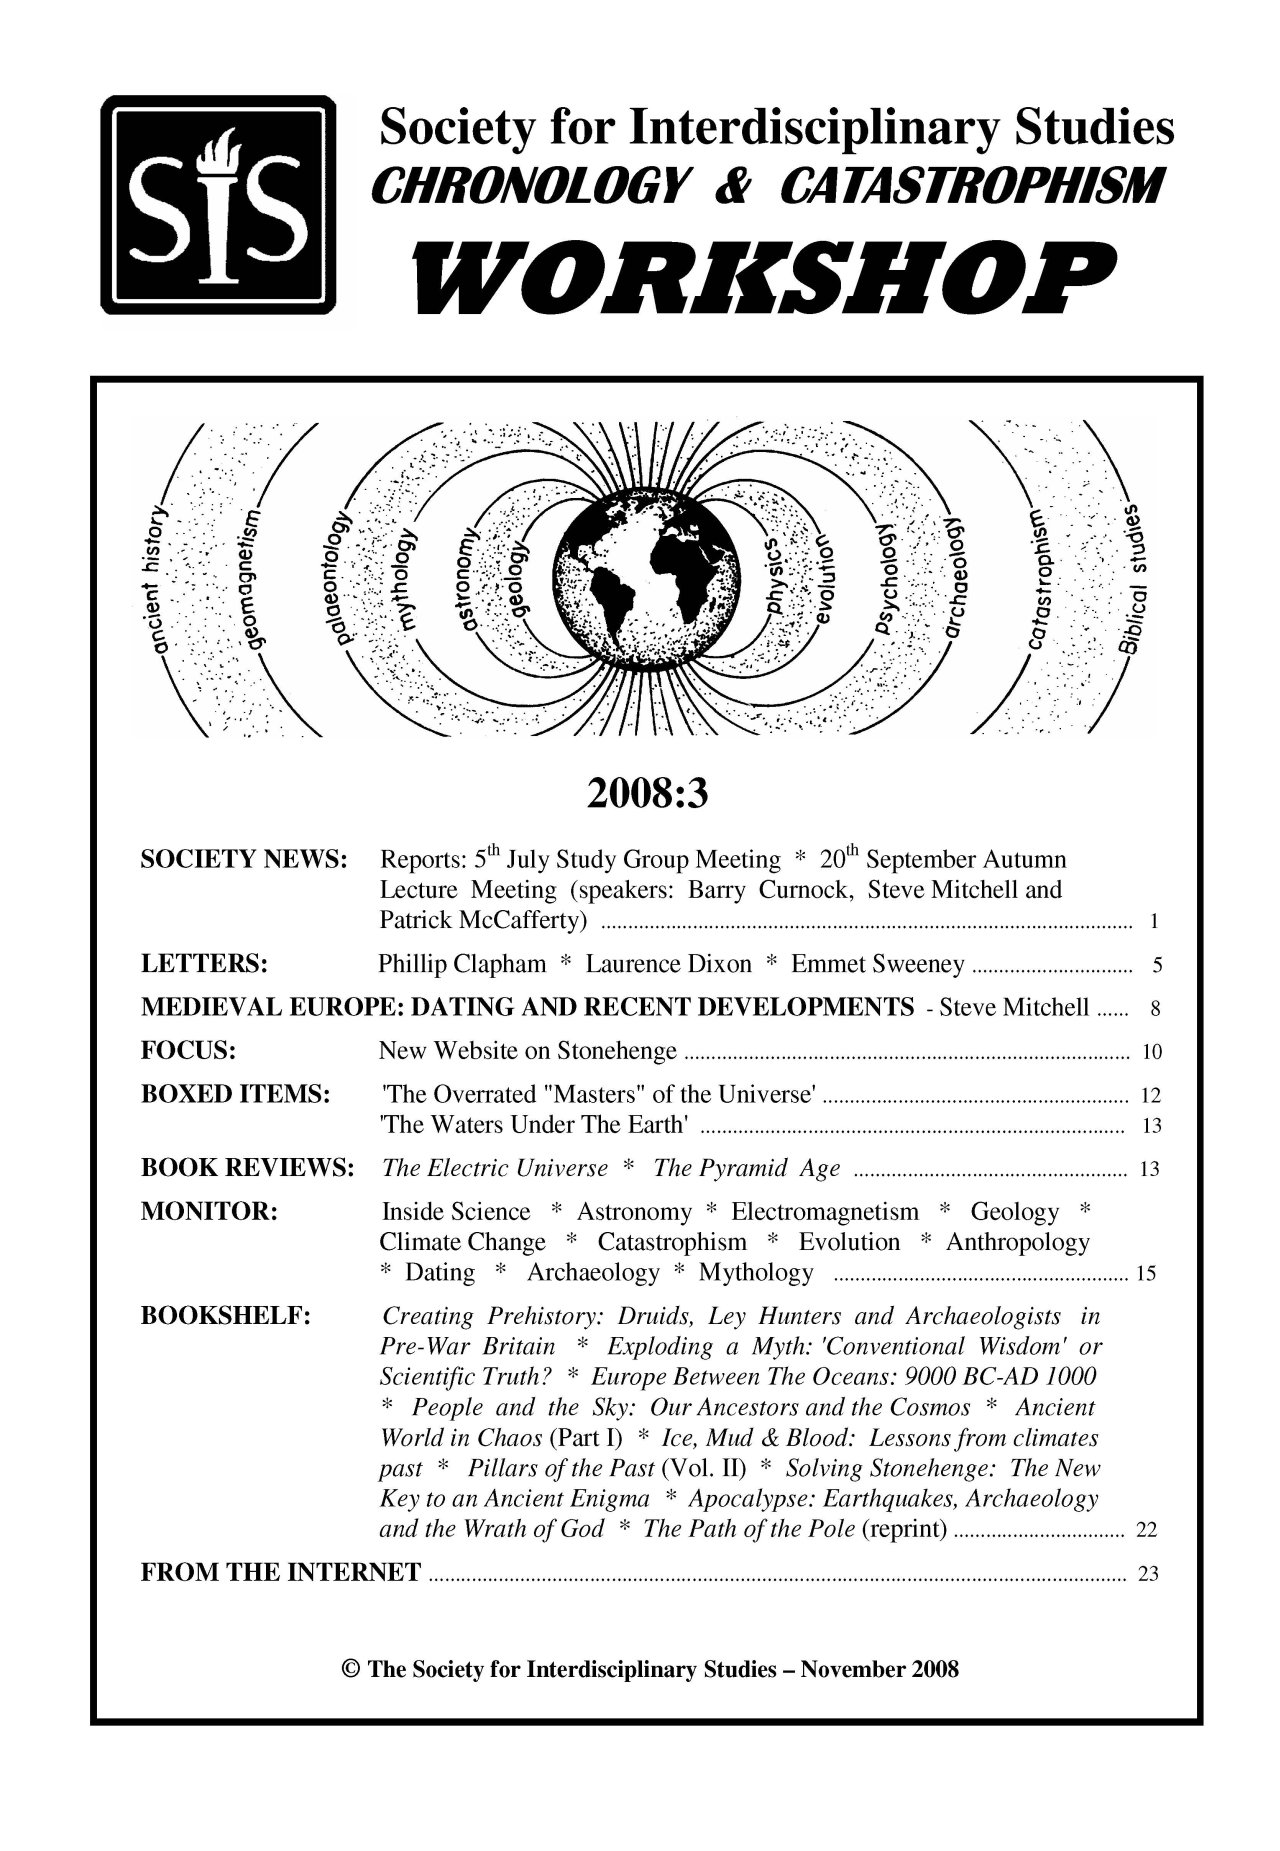 SIS Workshop 2008-3 cover